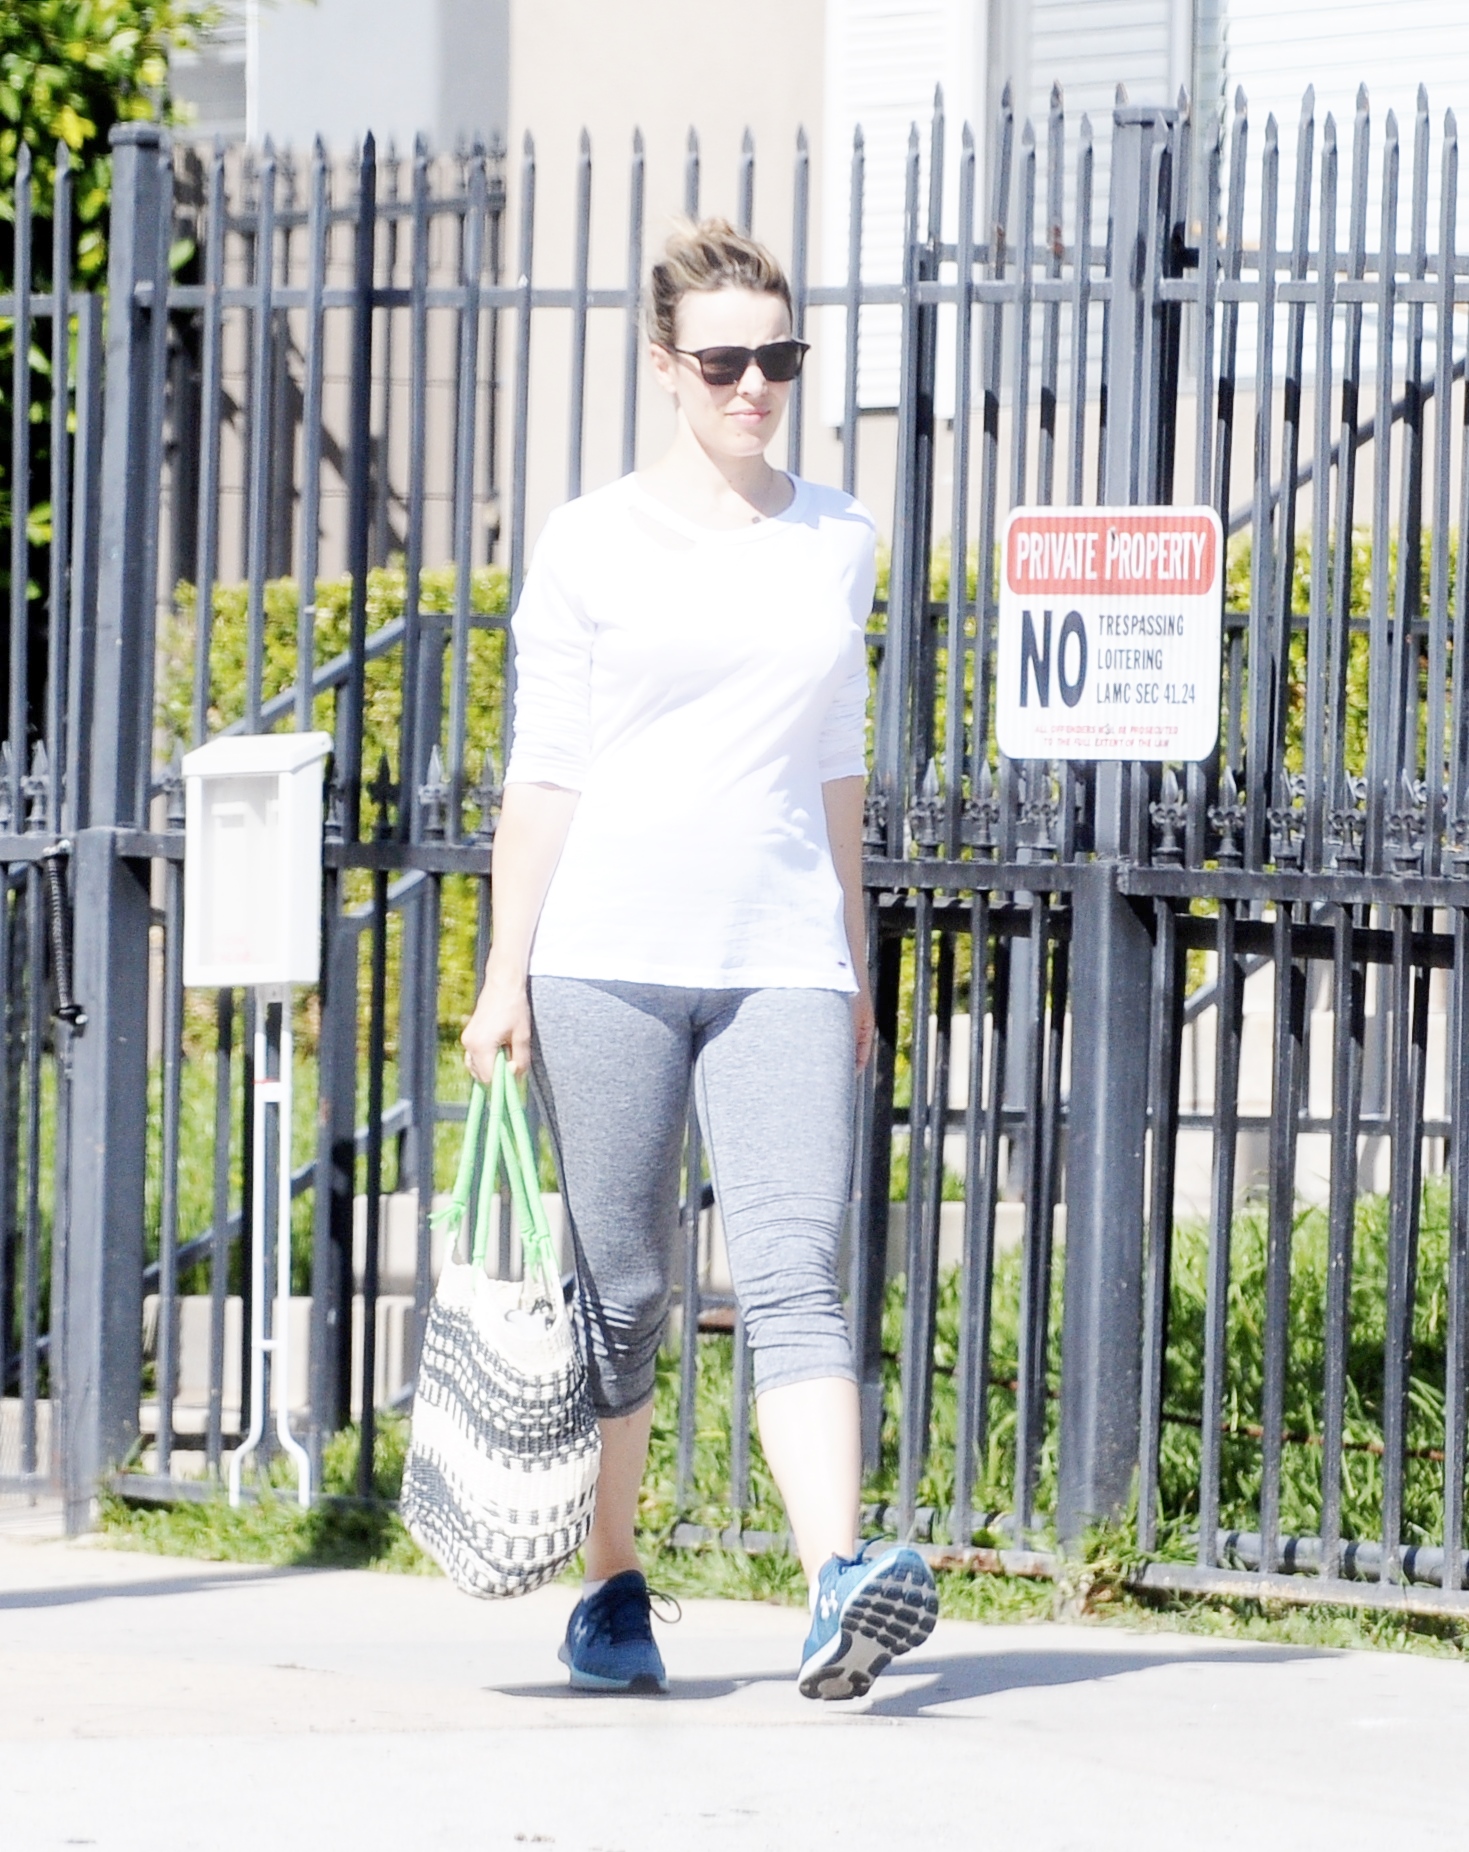 Hollywood star Rachel McAdams wearing gray yoga pants with visible camel toe. 